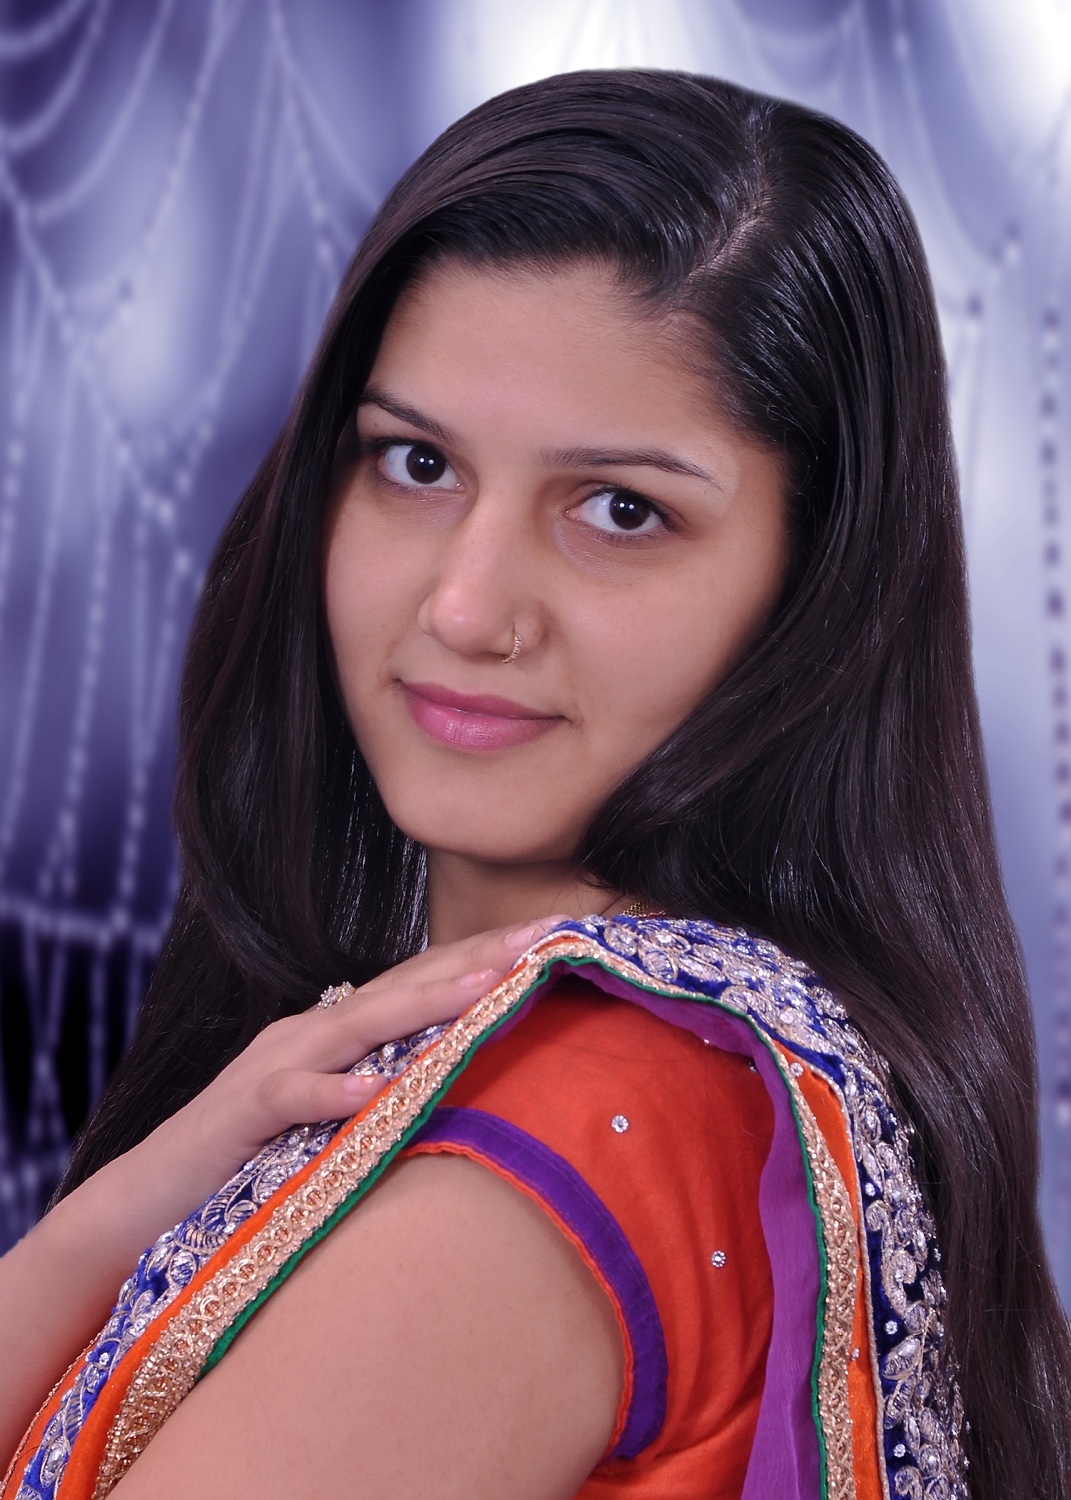 Sapna Choudhary Xxxcom - Sapna Choudhary Hot Pictures In Jeans Top & HD Images